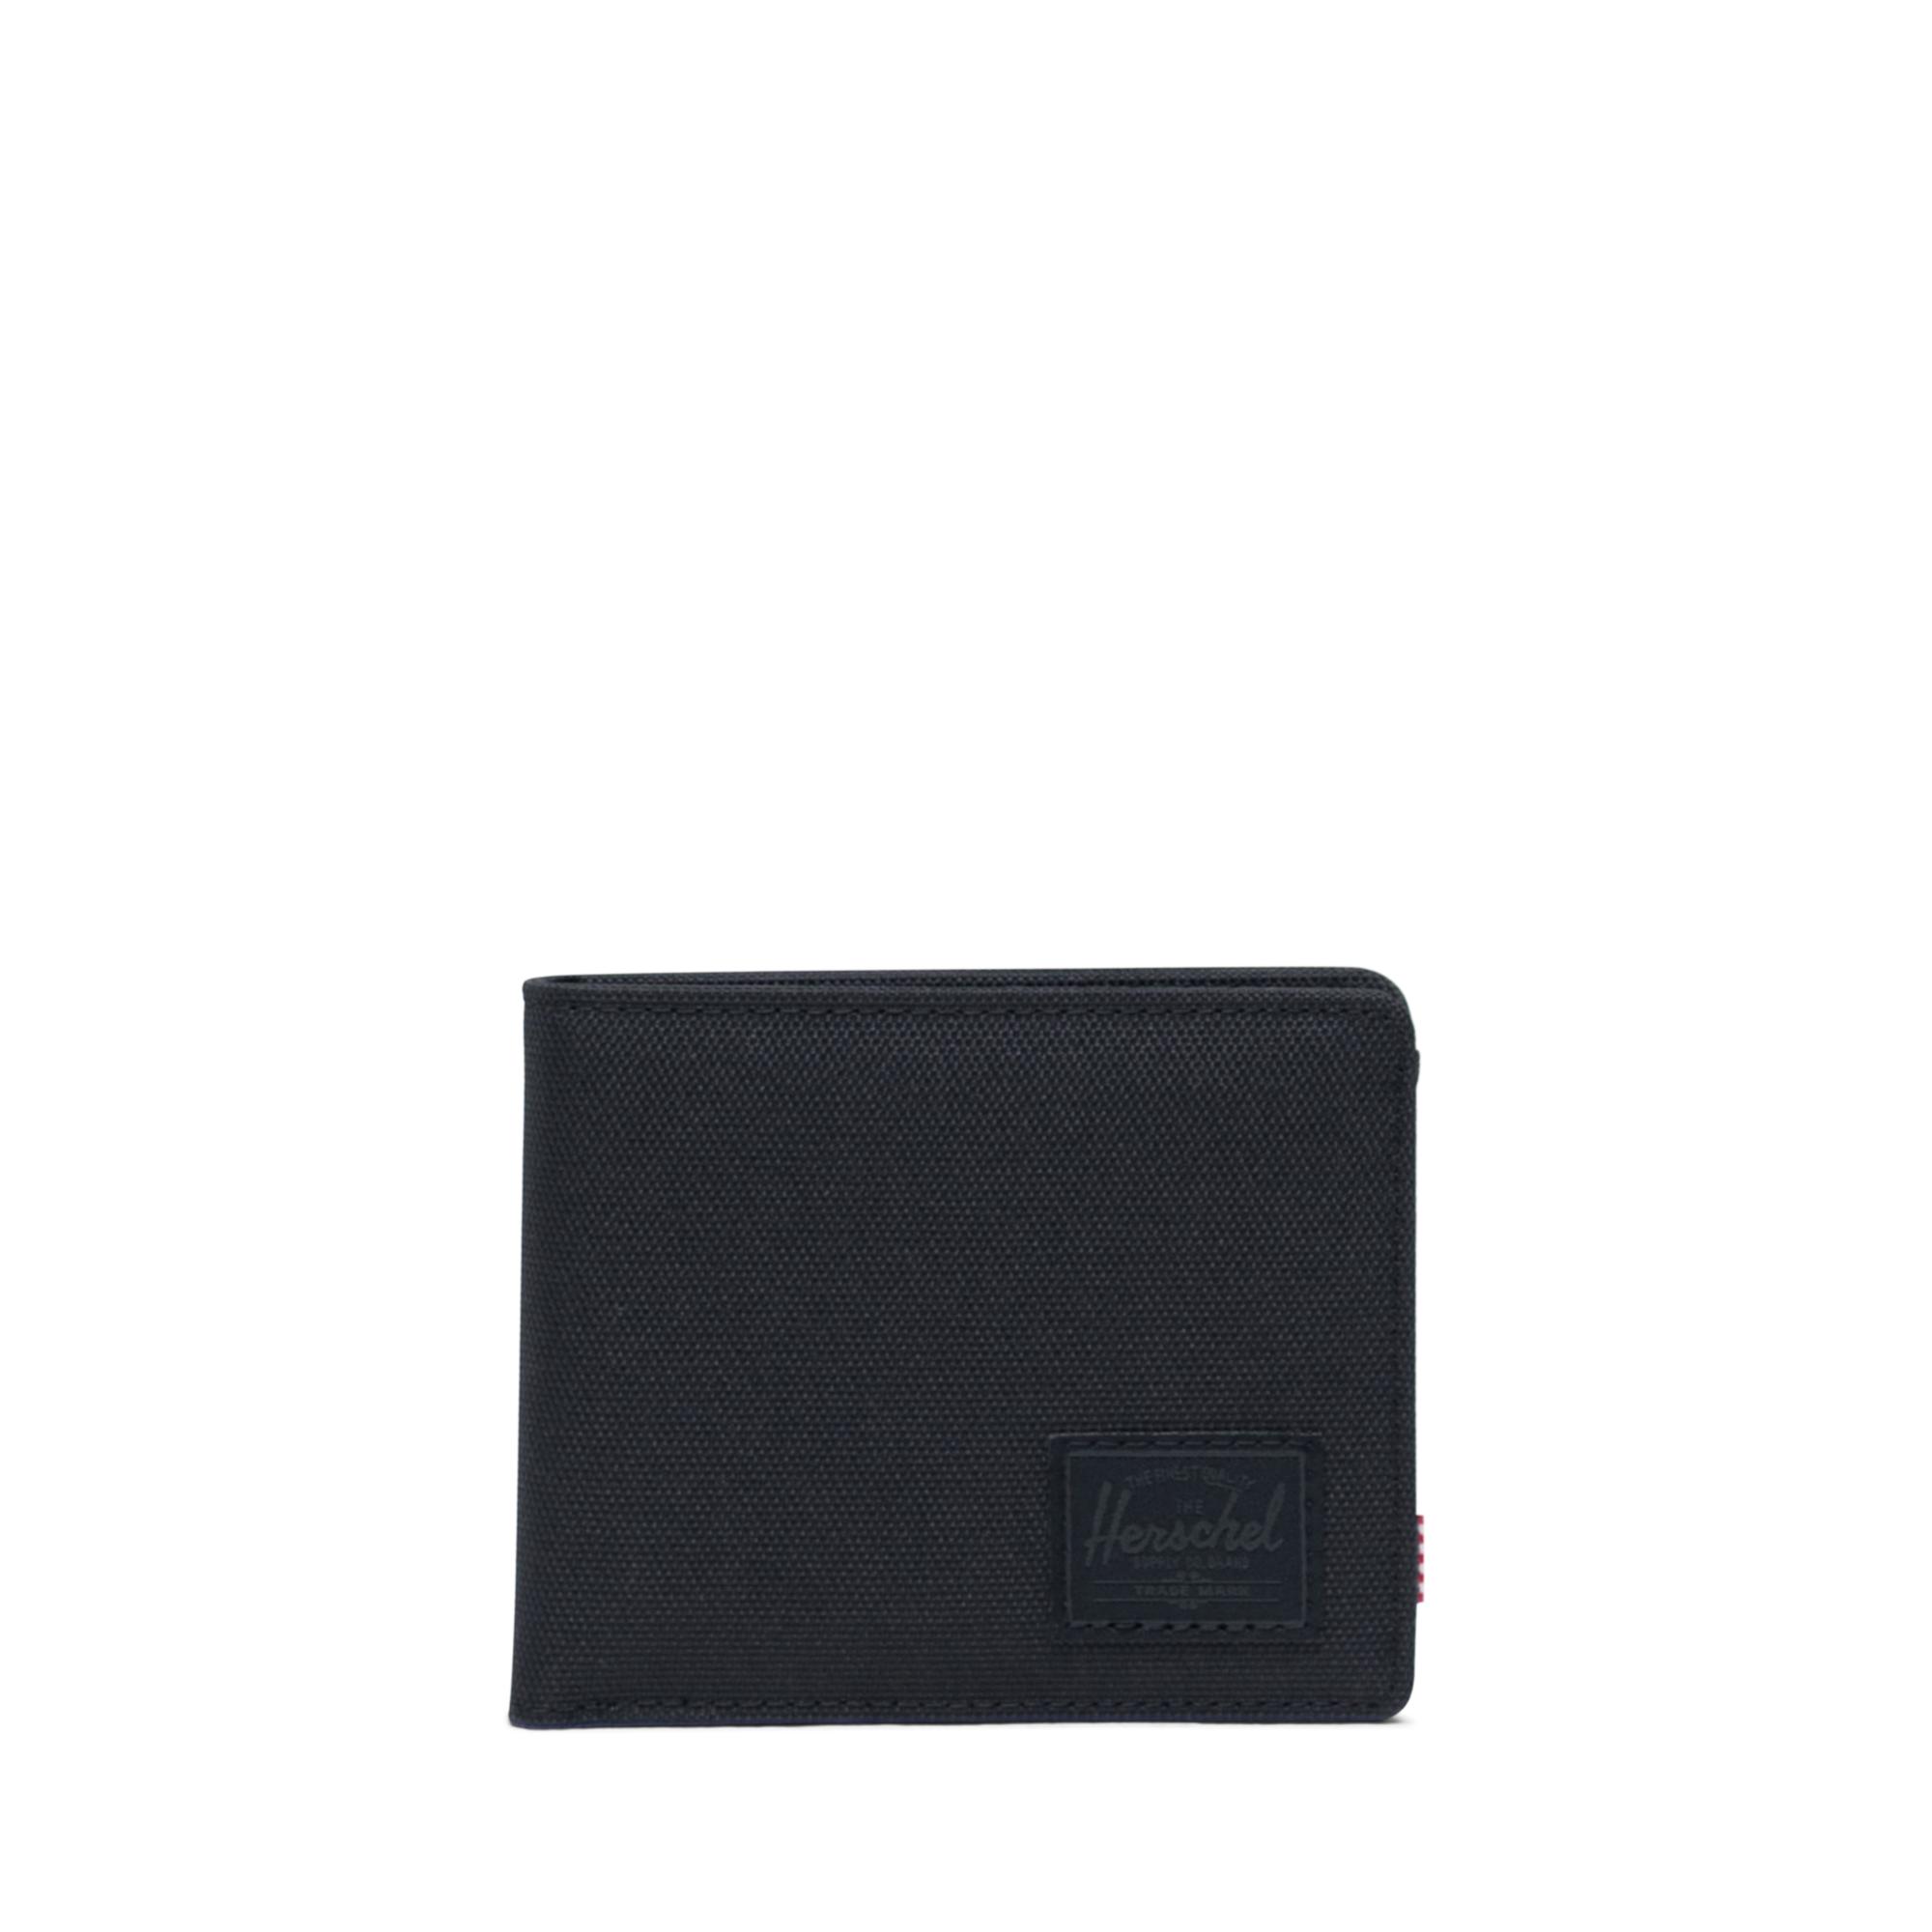 Taille Unique Porte carte RFID Noir Haché Marque : HerschelHerschel Roy Coin Porte Monnaie 